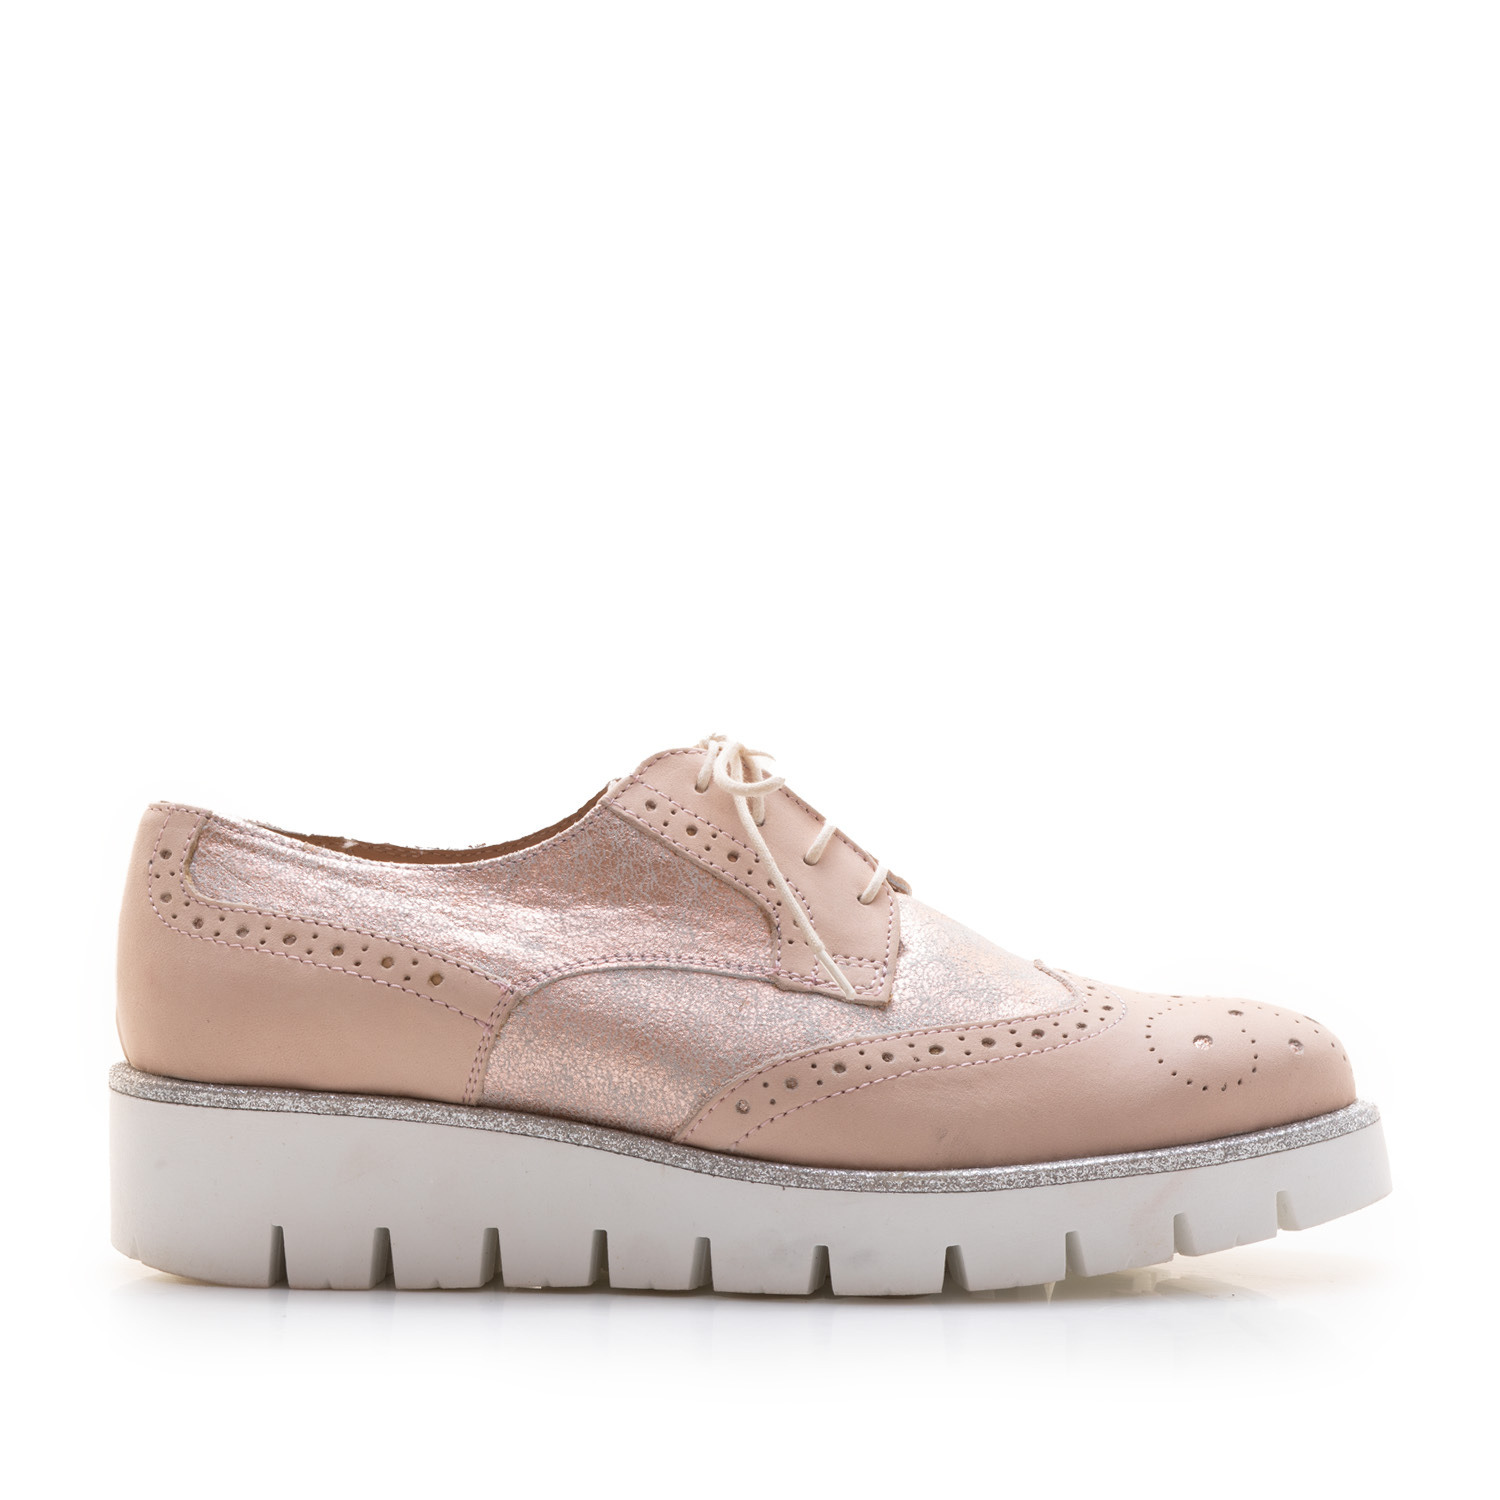 Pantofi casual dama din piele naturala, Leofex - Mostră 012-1 Roz Box Sidefat Box